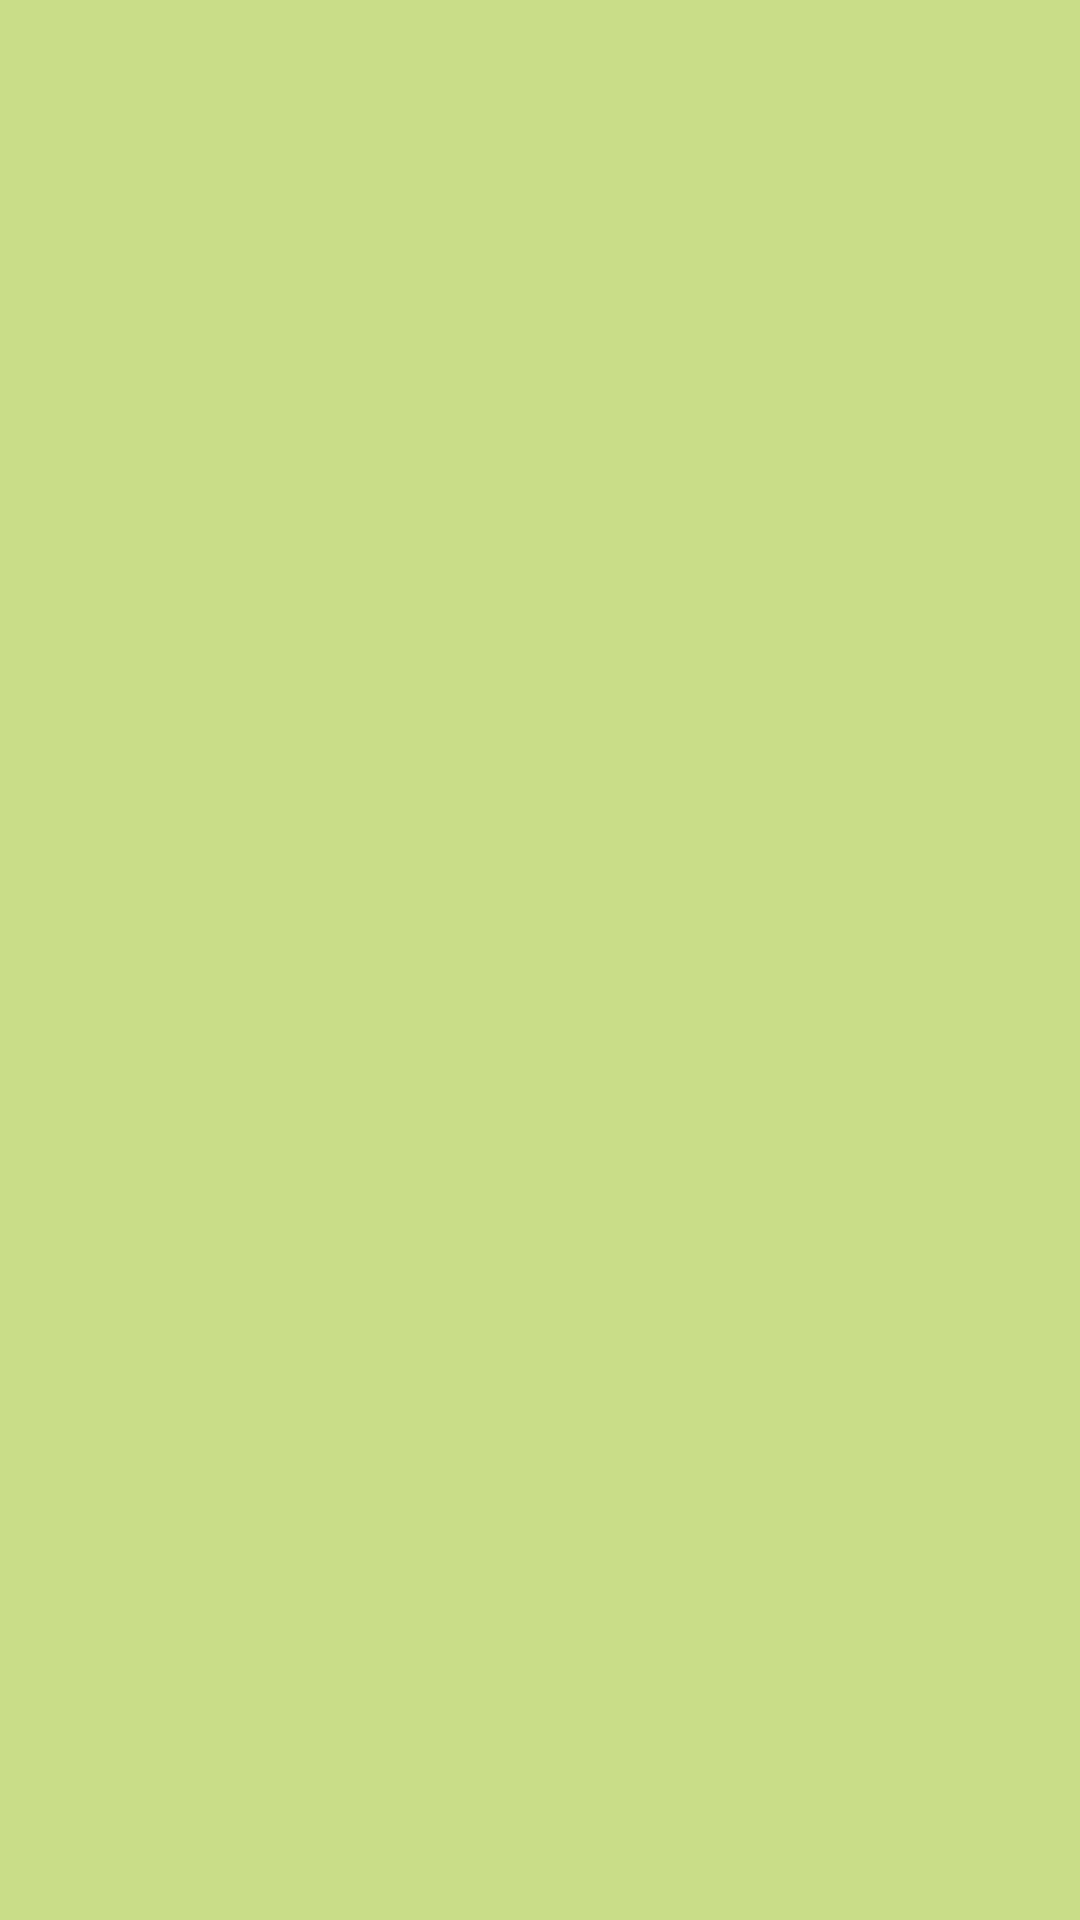 1080x1920 Medium Spring Bud Solid Color Background